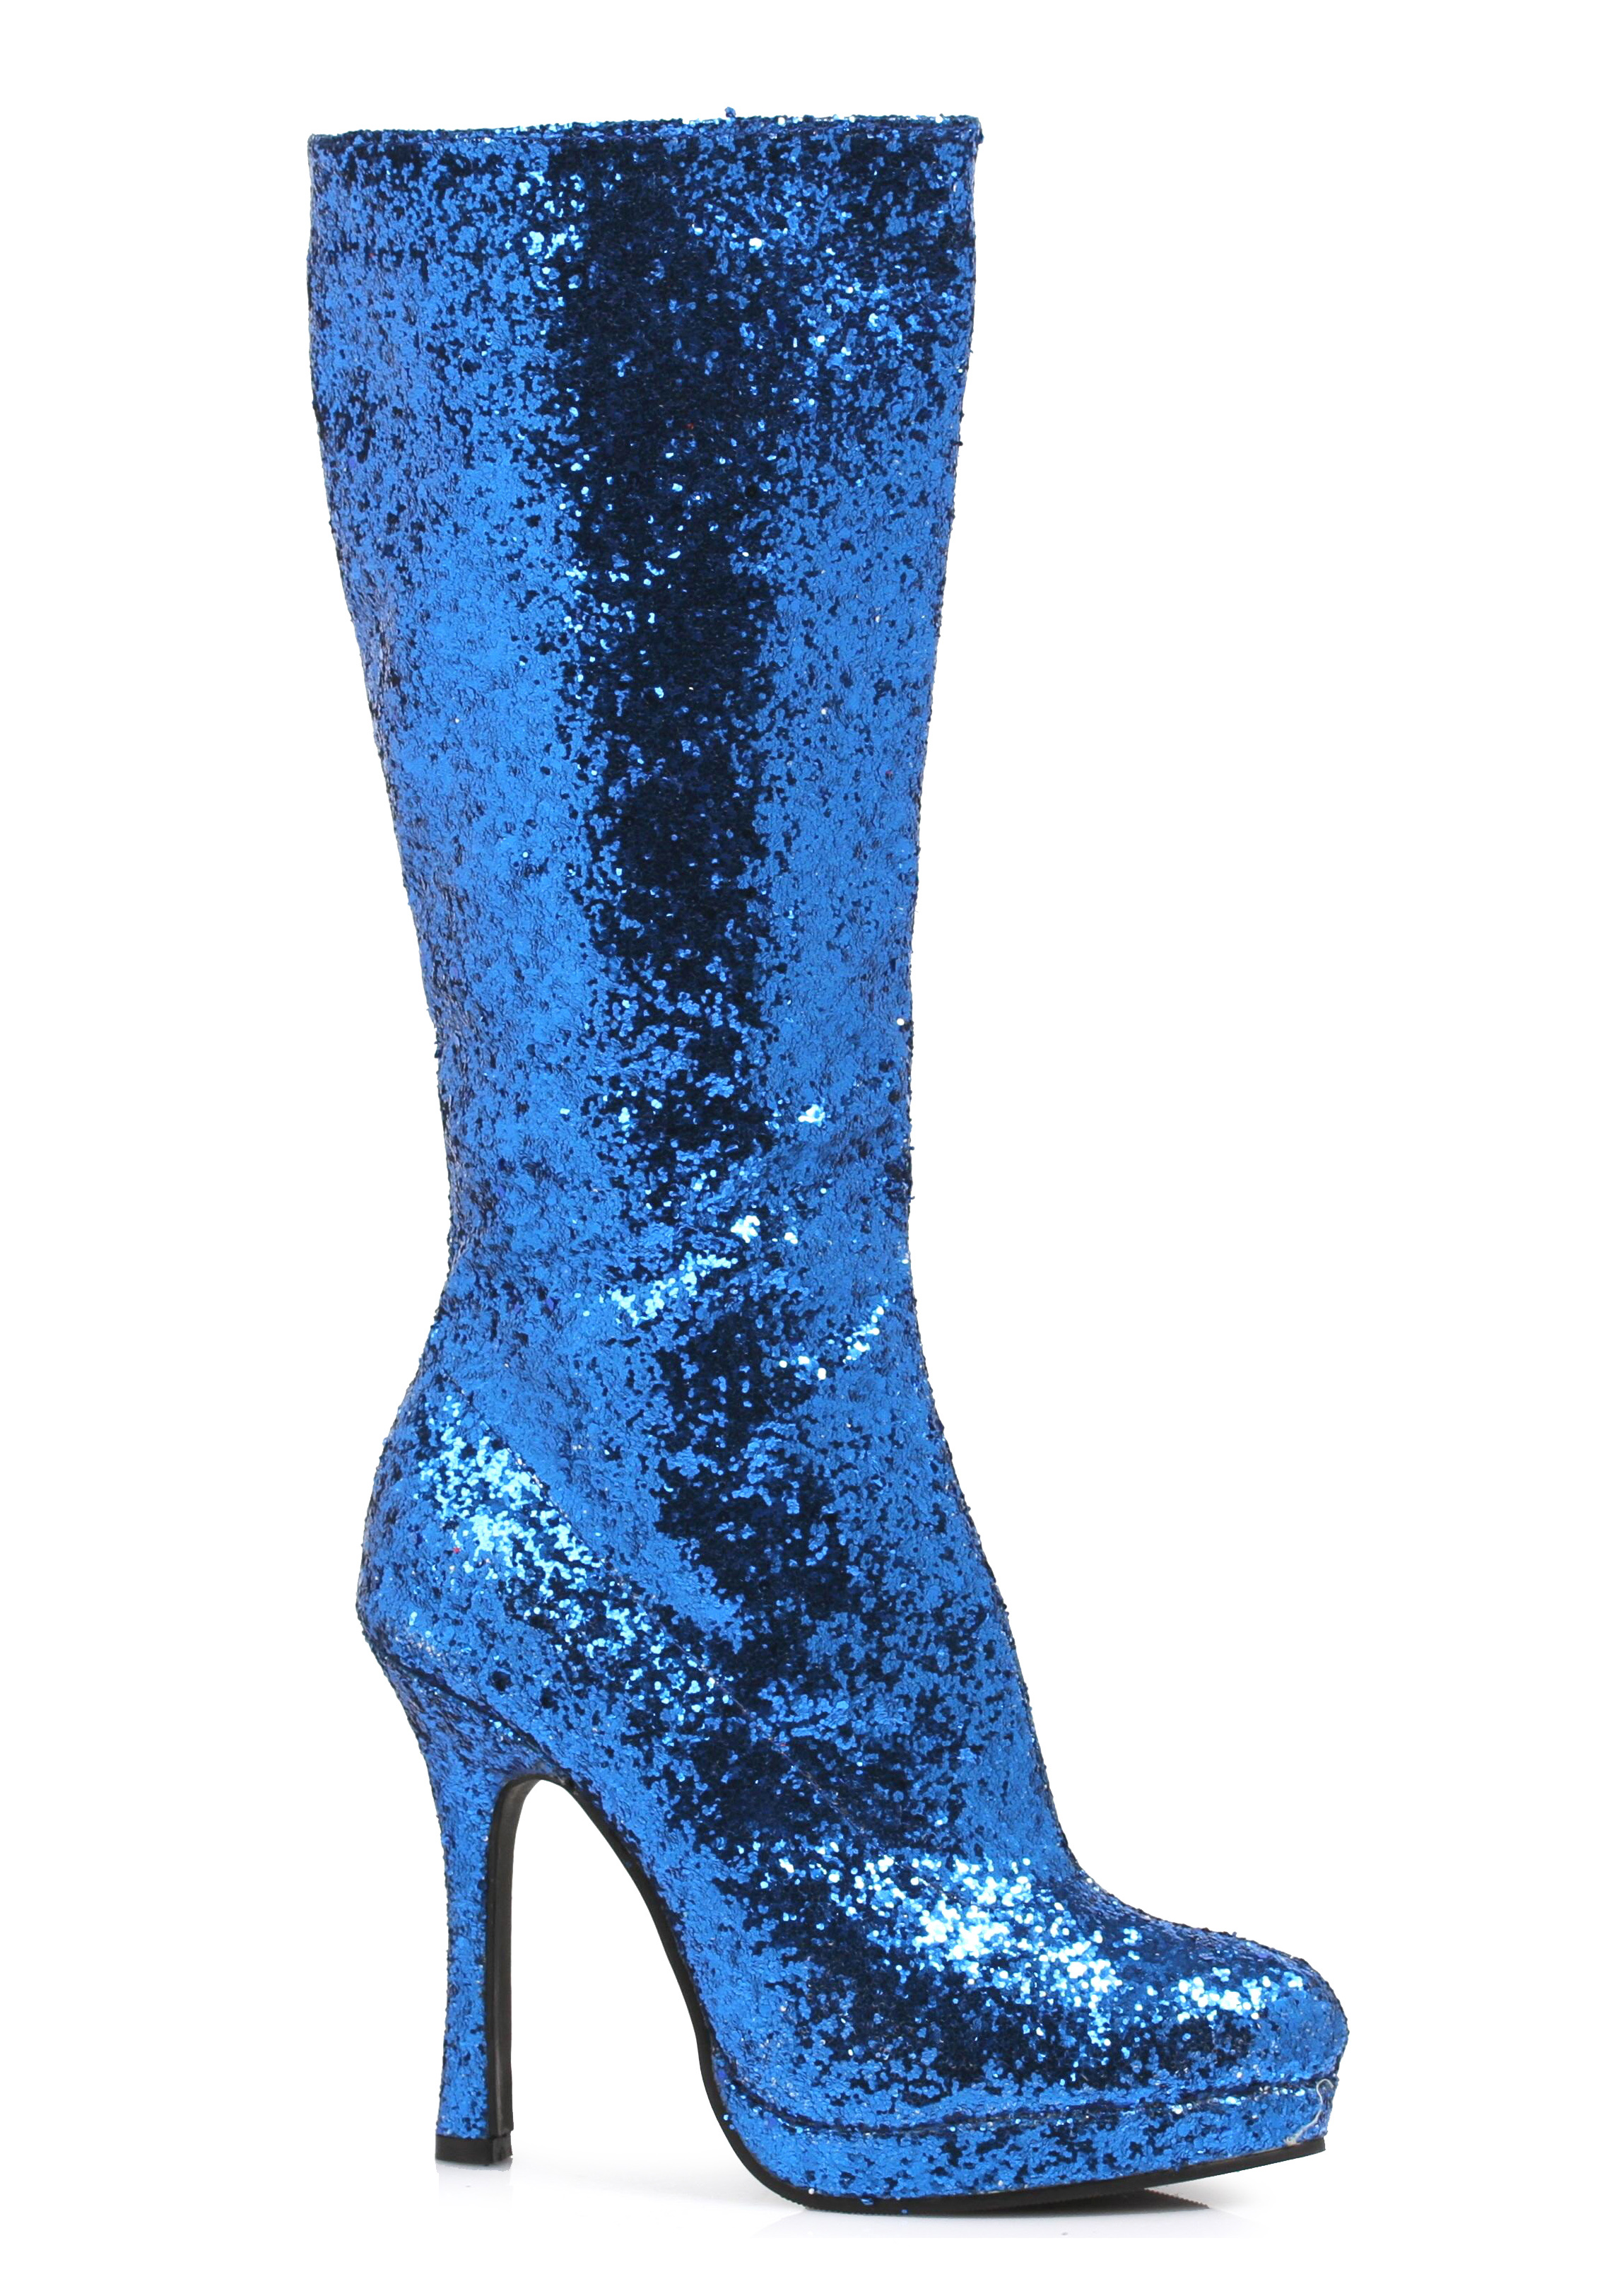 Ellie Shoes 421-ZARA 4 Inch Knee High Boot With Glitter | eBay